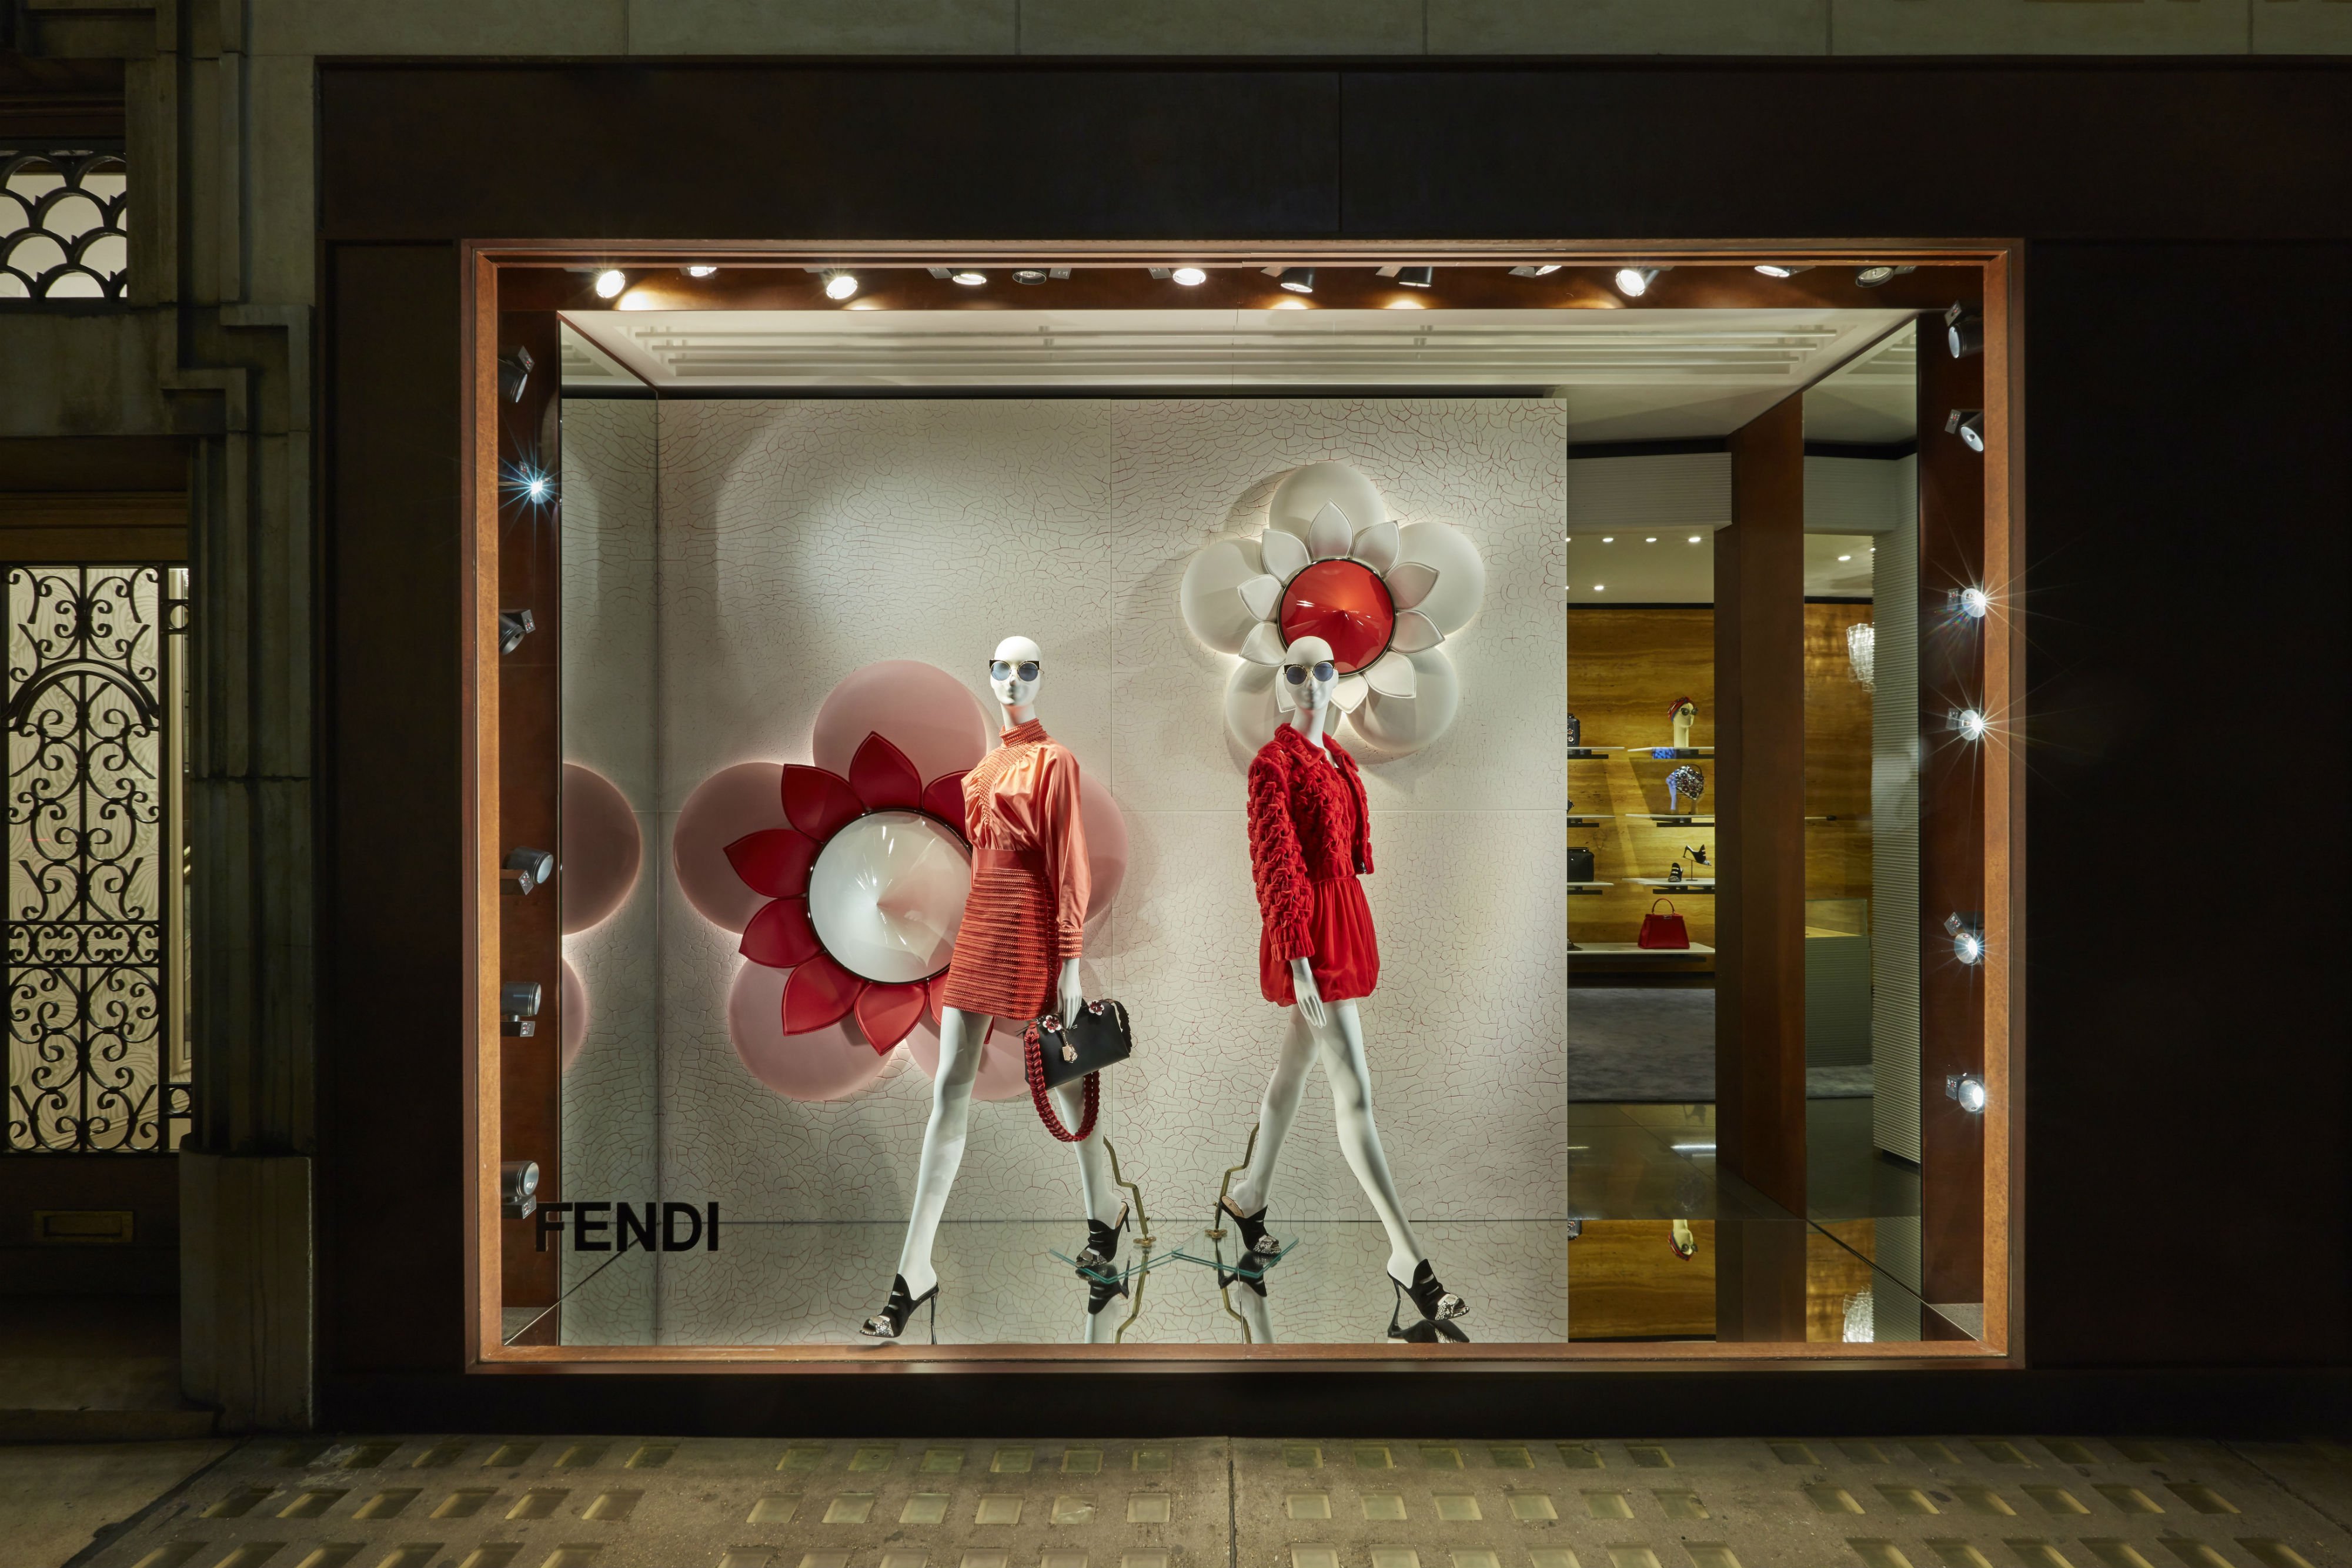 Fendi on X: Fendi boutique windows are illuminated by the